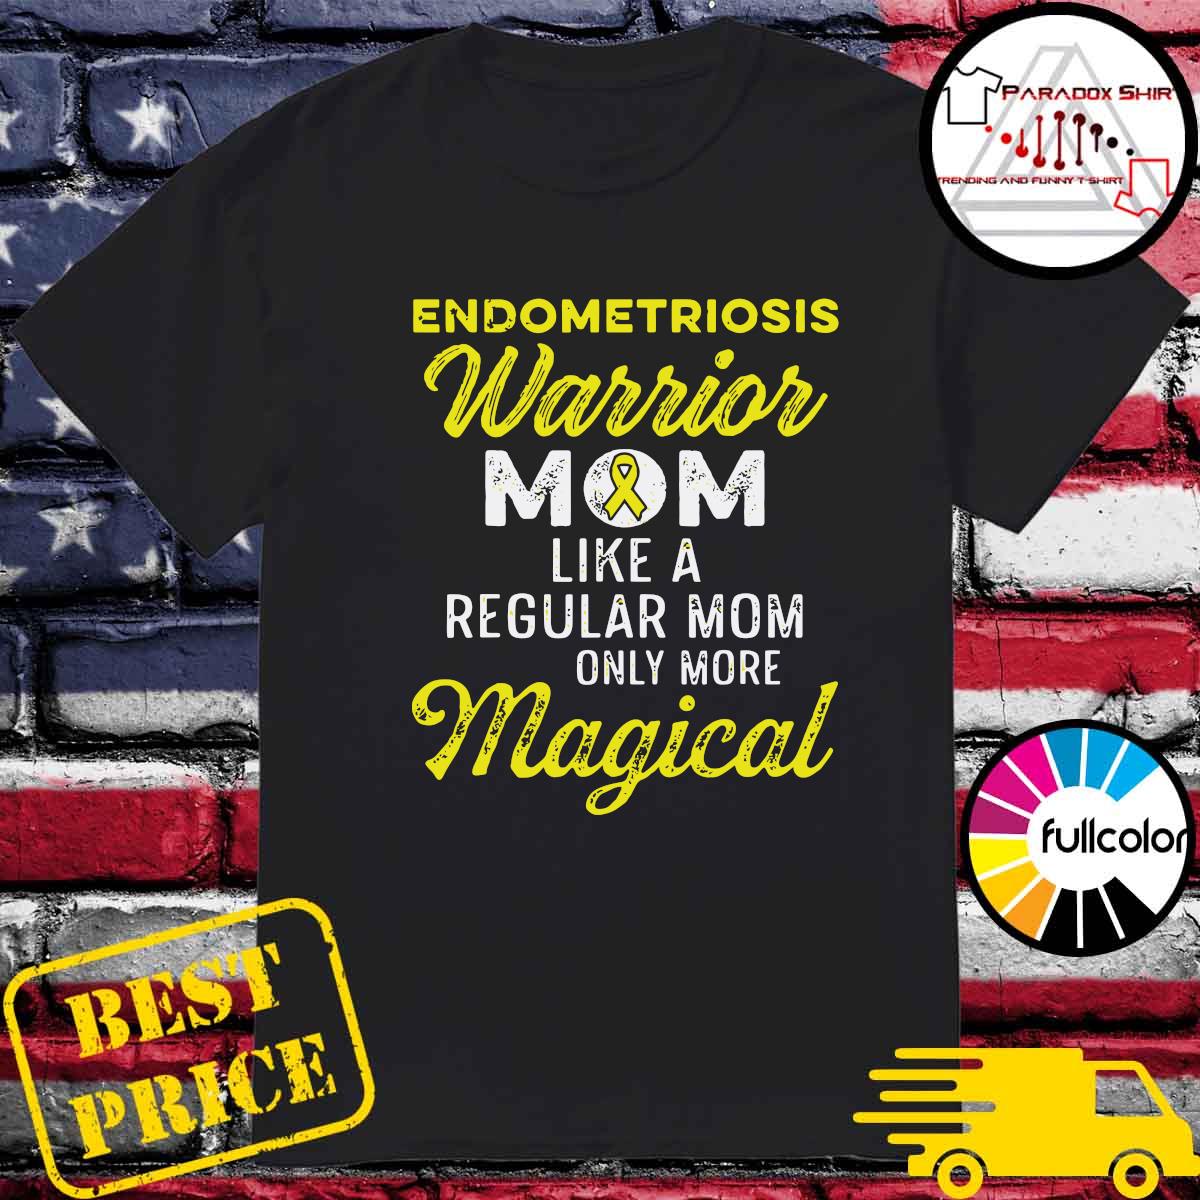 Endometriosis Endo Survivor Mom Warrior Shirt